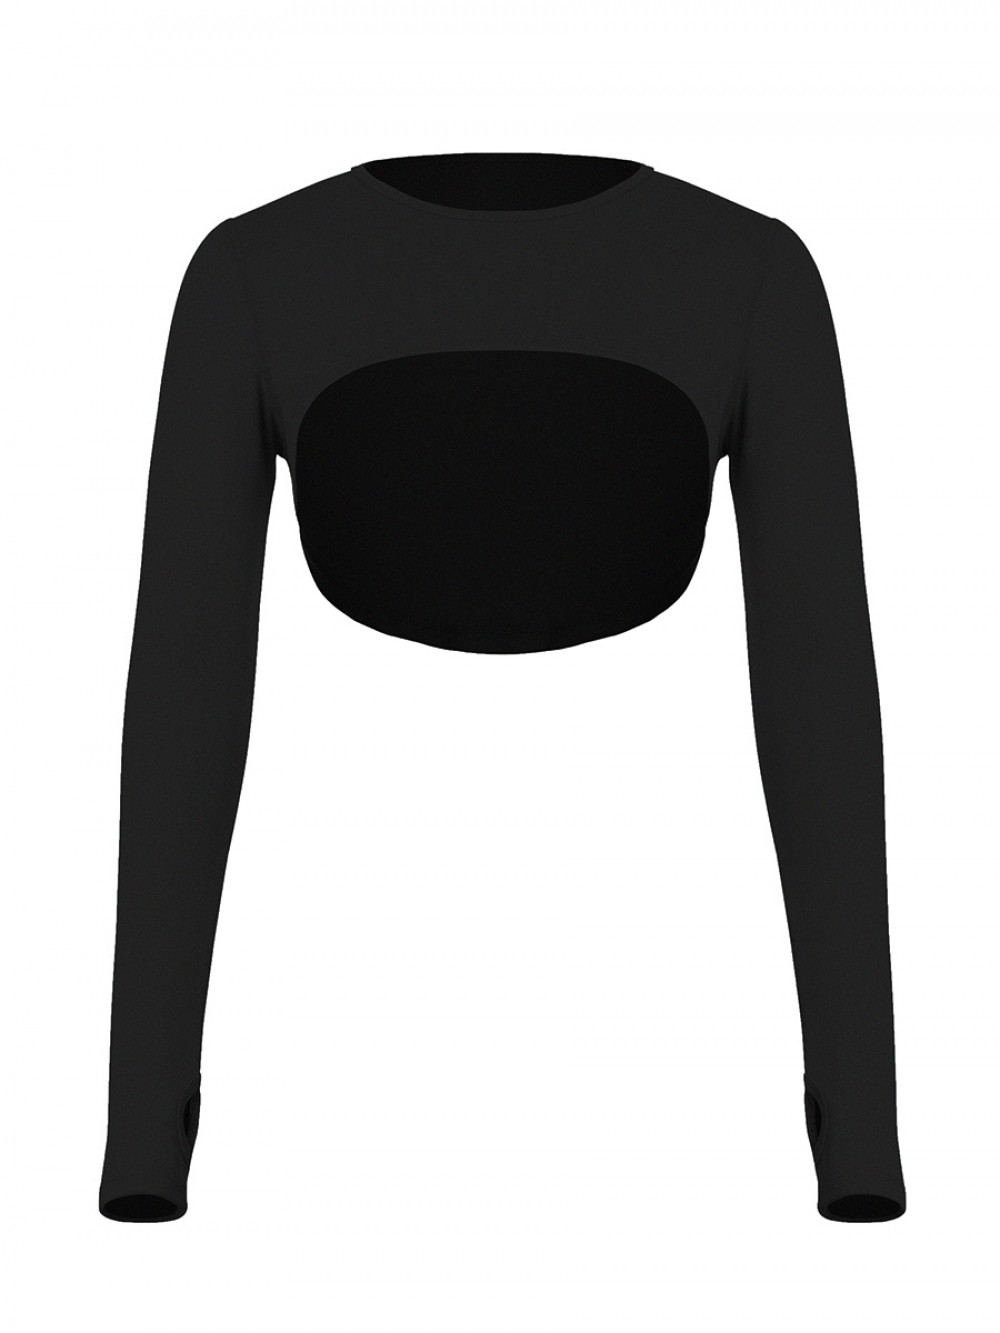 Black Round Collar Long Sleeve Crop Top For Women Runner